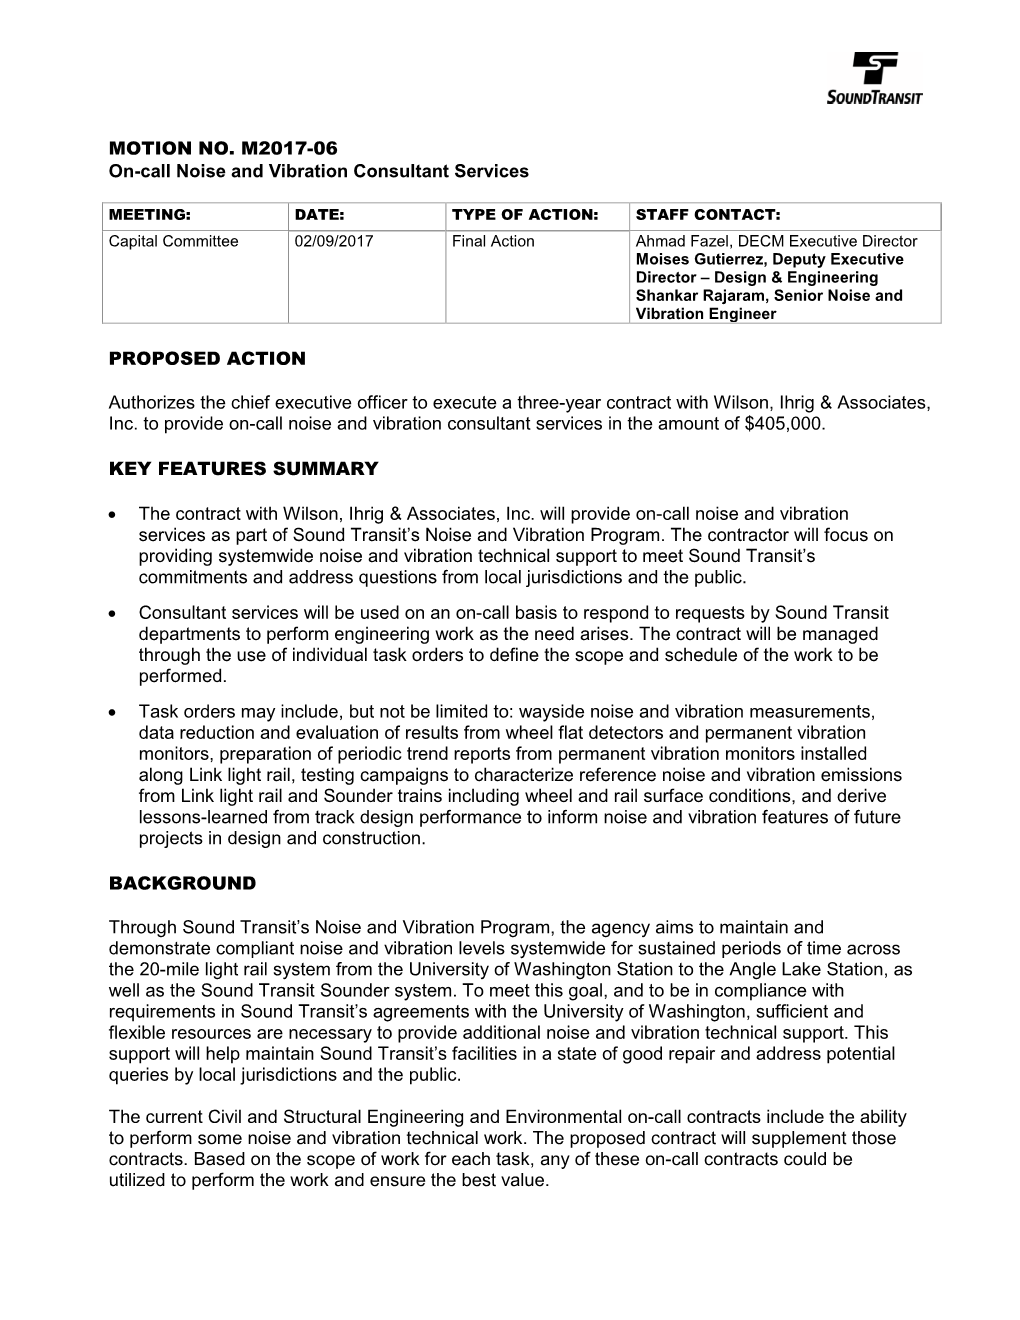 Staff Report Form